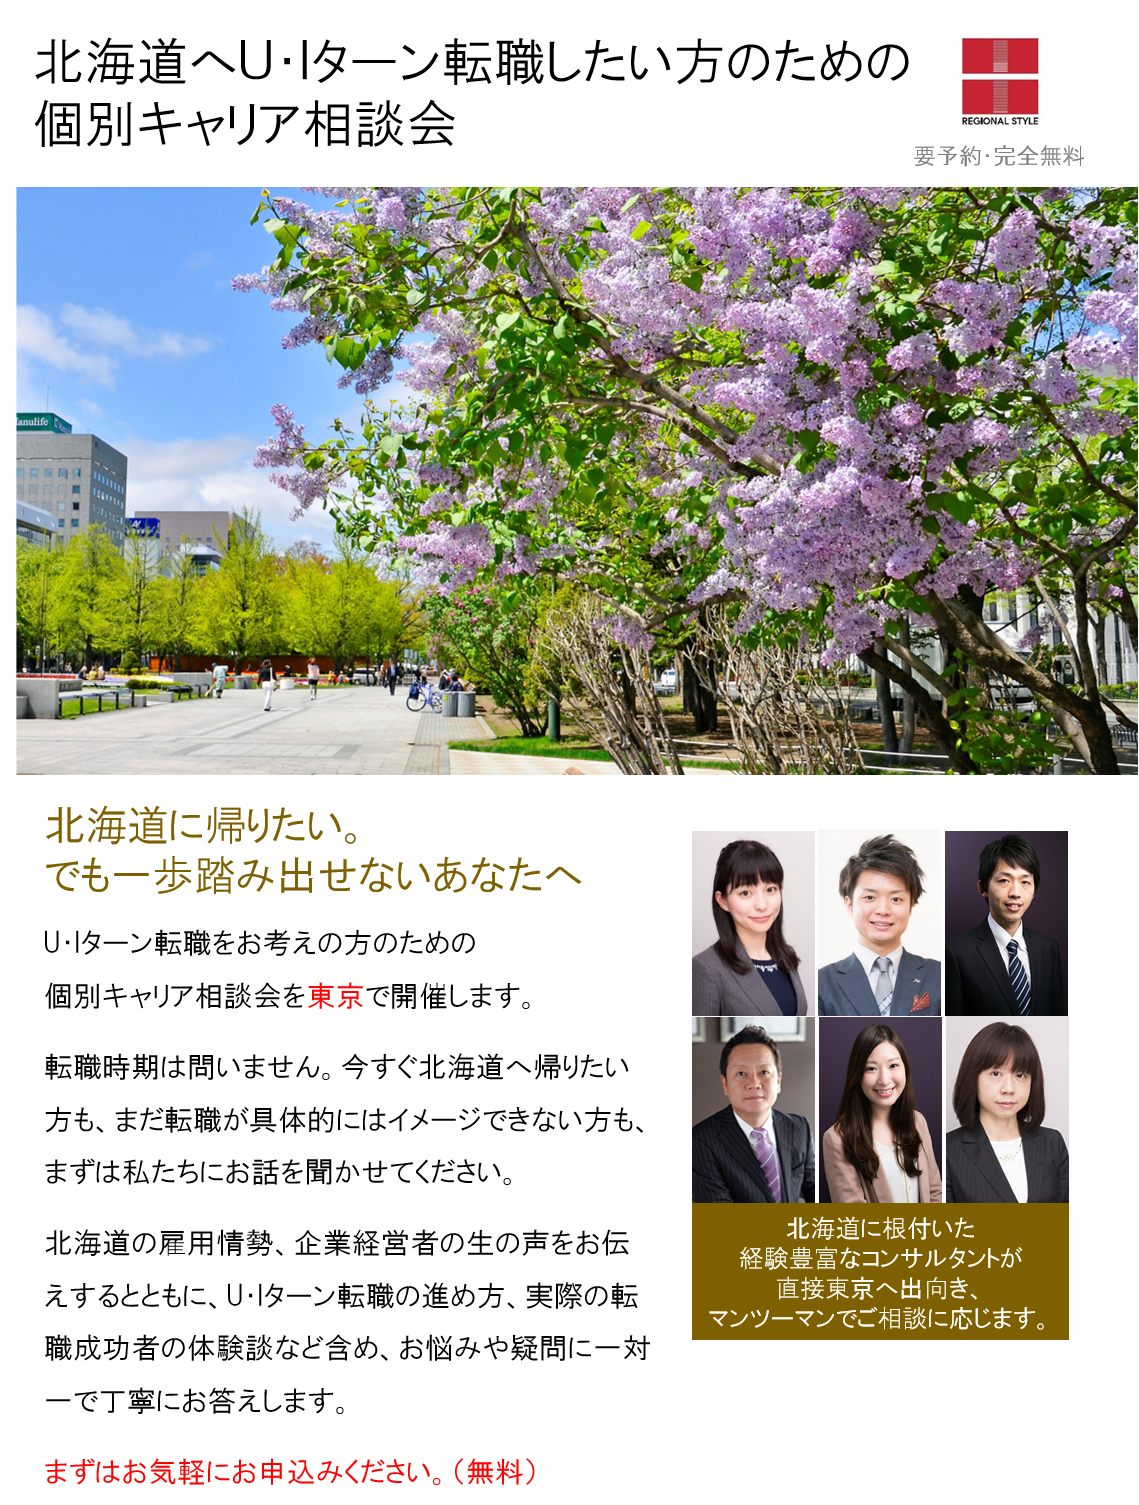 http://www.regional.co.jp/career_mt/072728.png